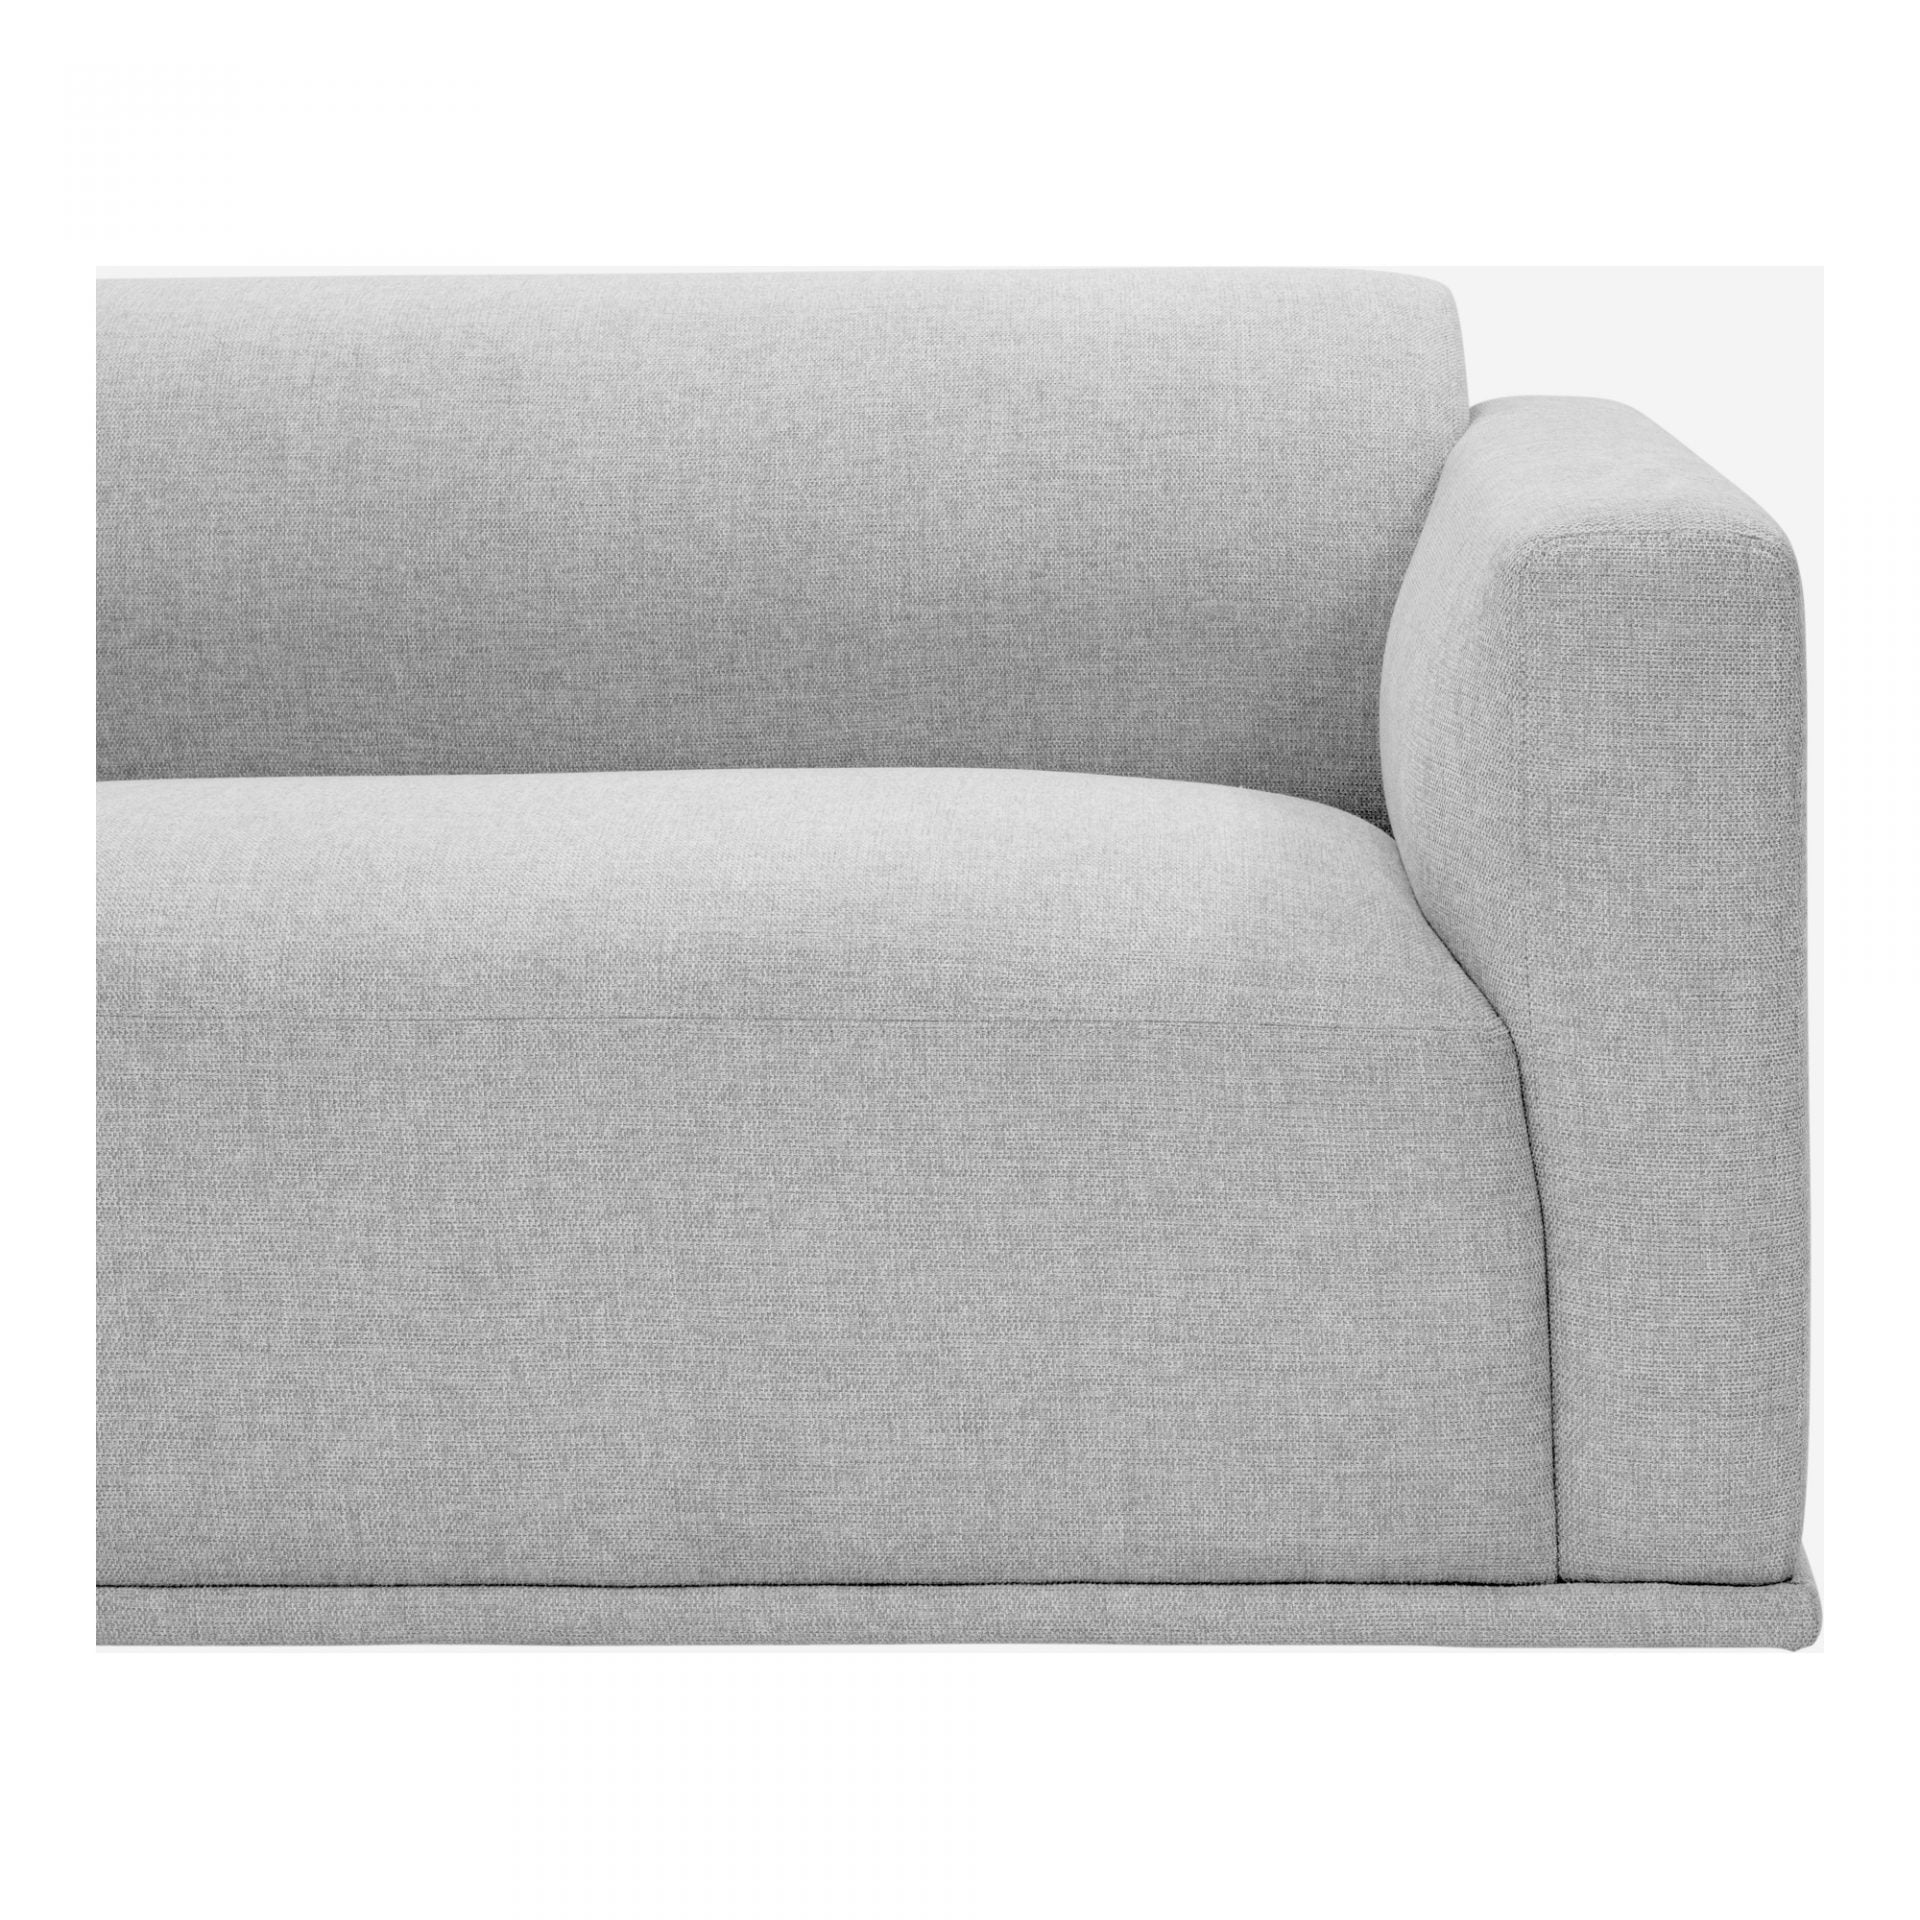 Malou Grey Sofa YC-1039-15